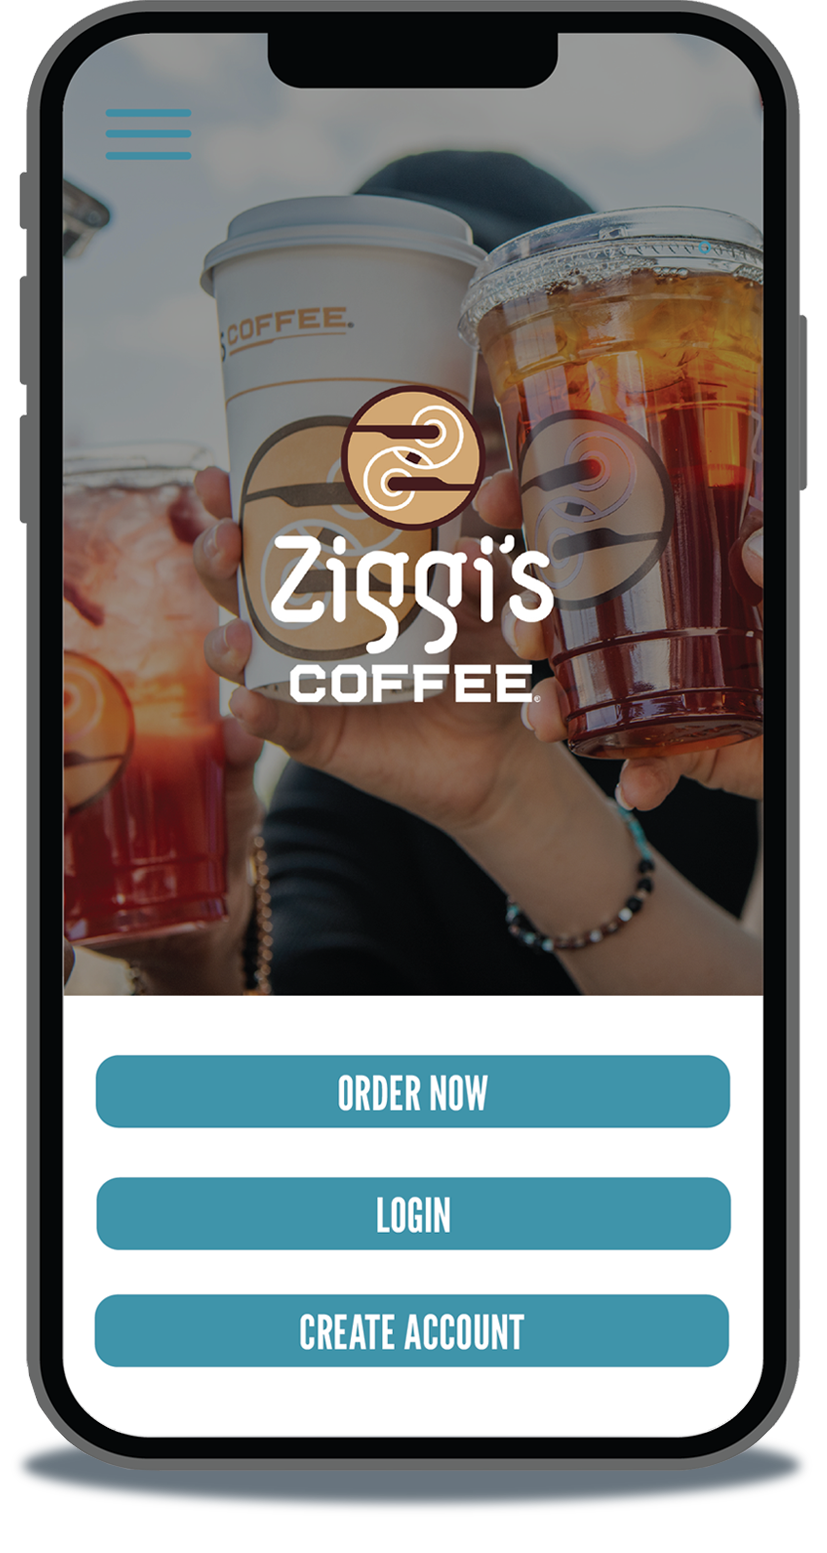 Ziggi's Coffee Phone App Image